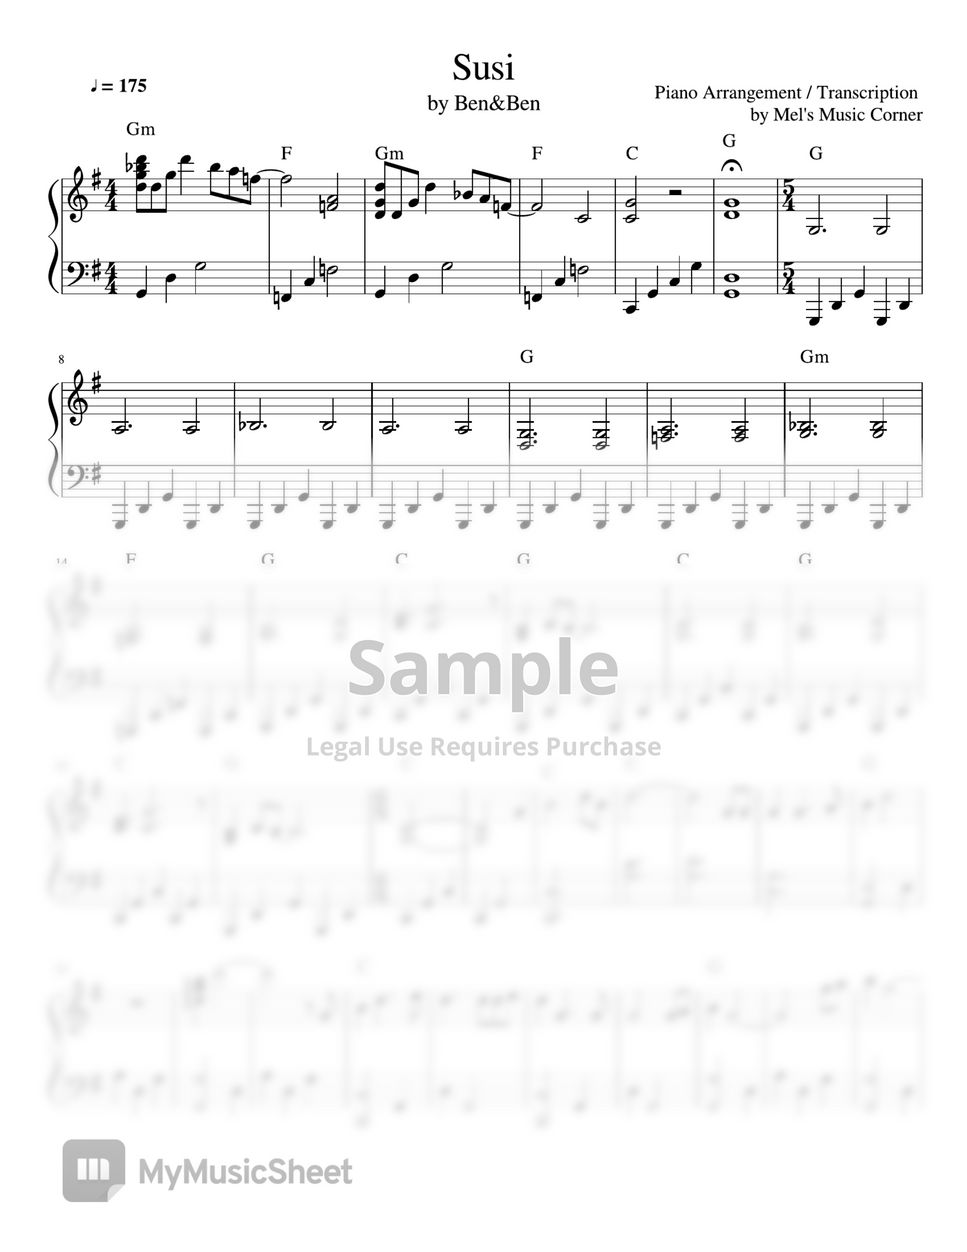 Ben&Ben - Susi (piano sheet music) by Mel's Music Corner